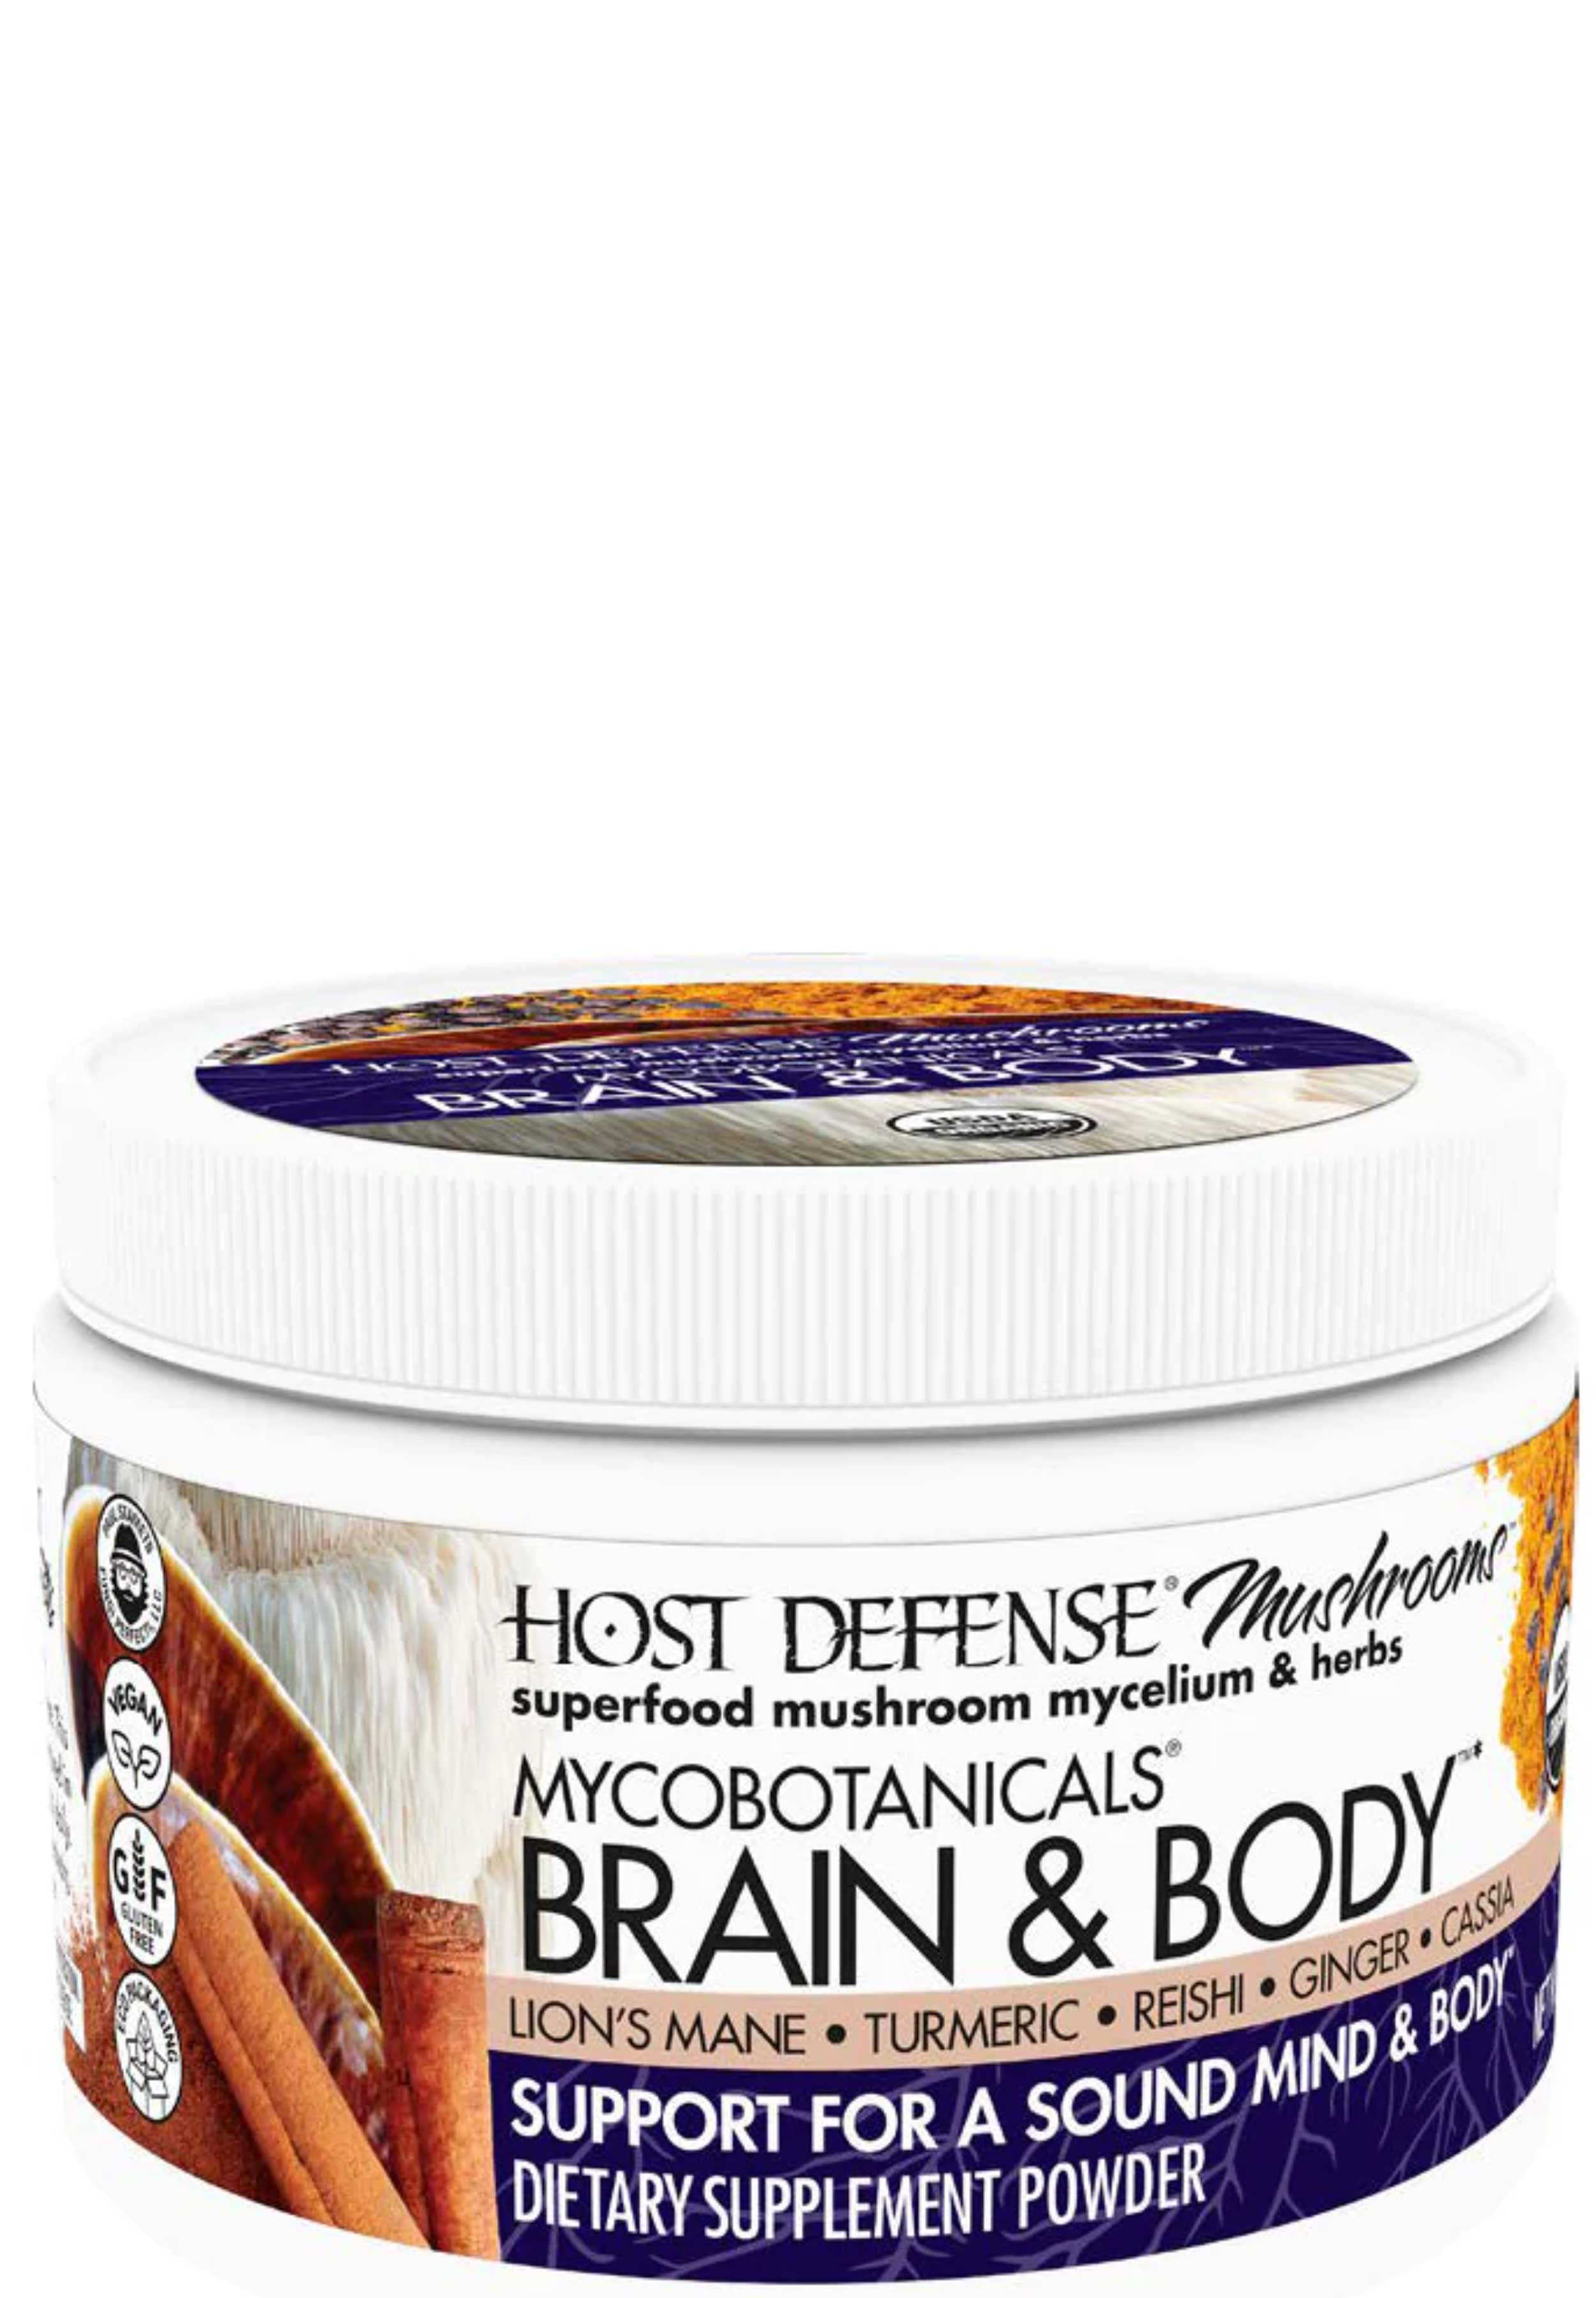 Host Defense MycoBotanicals Brain & Body Powder